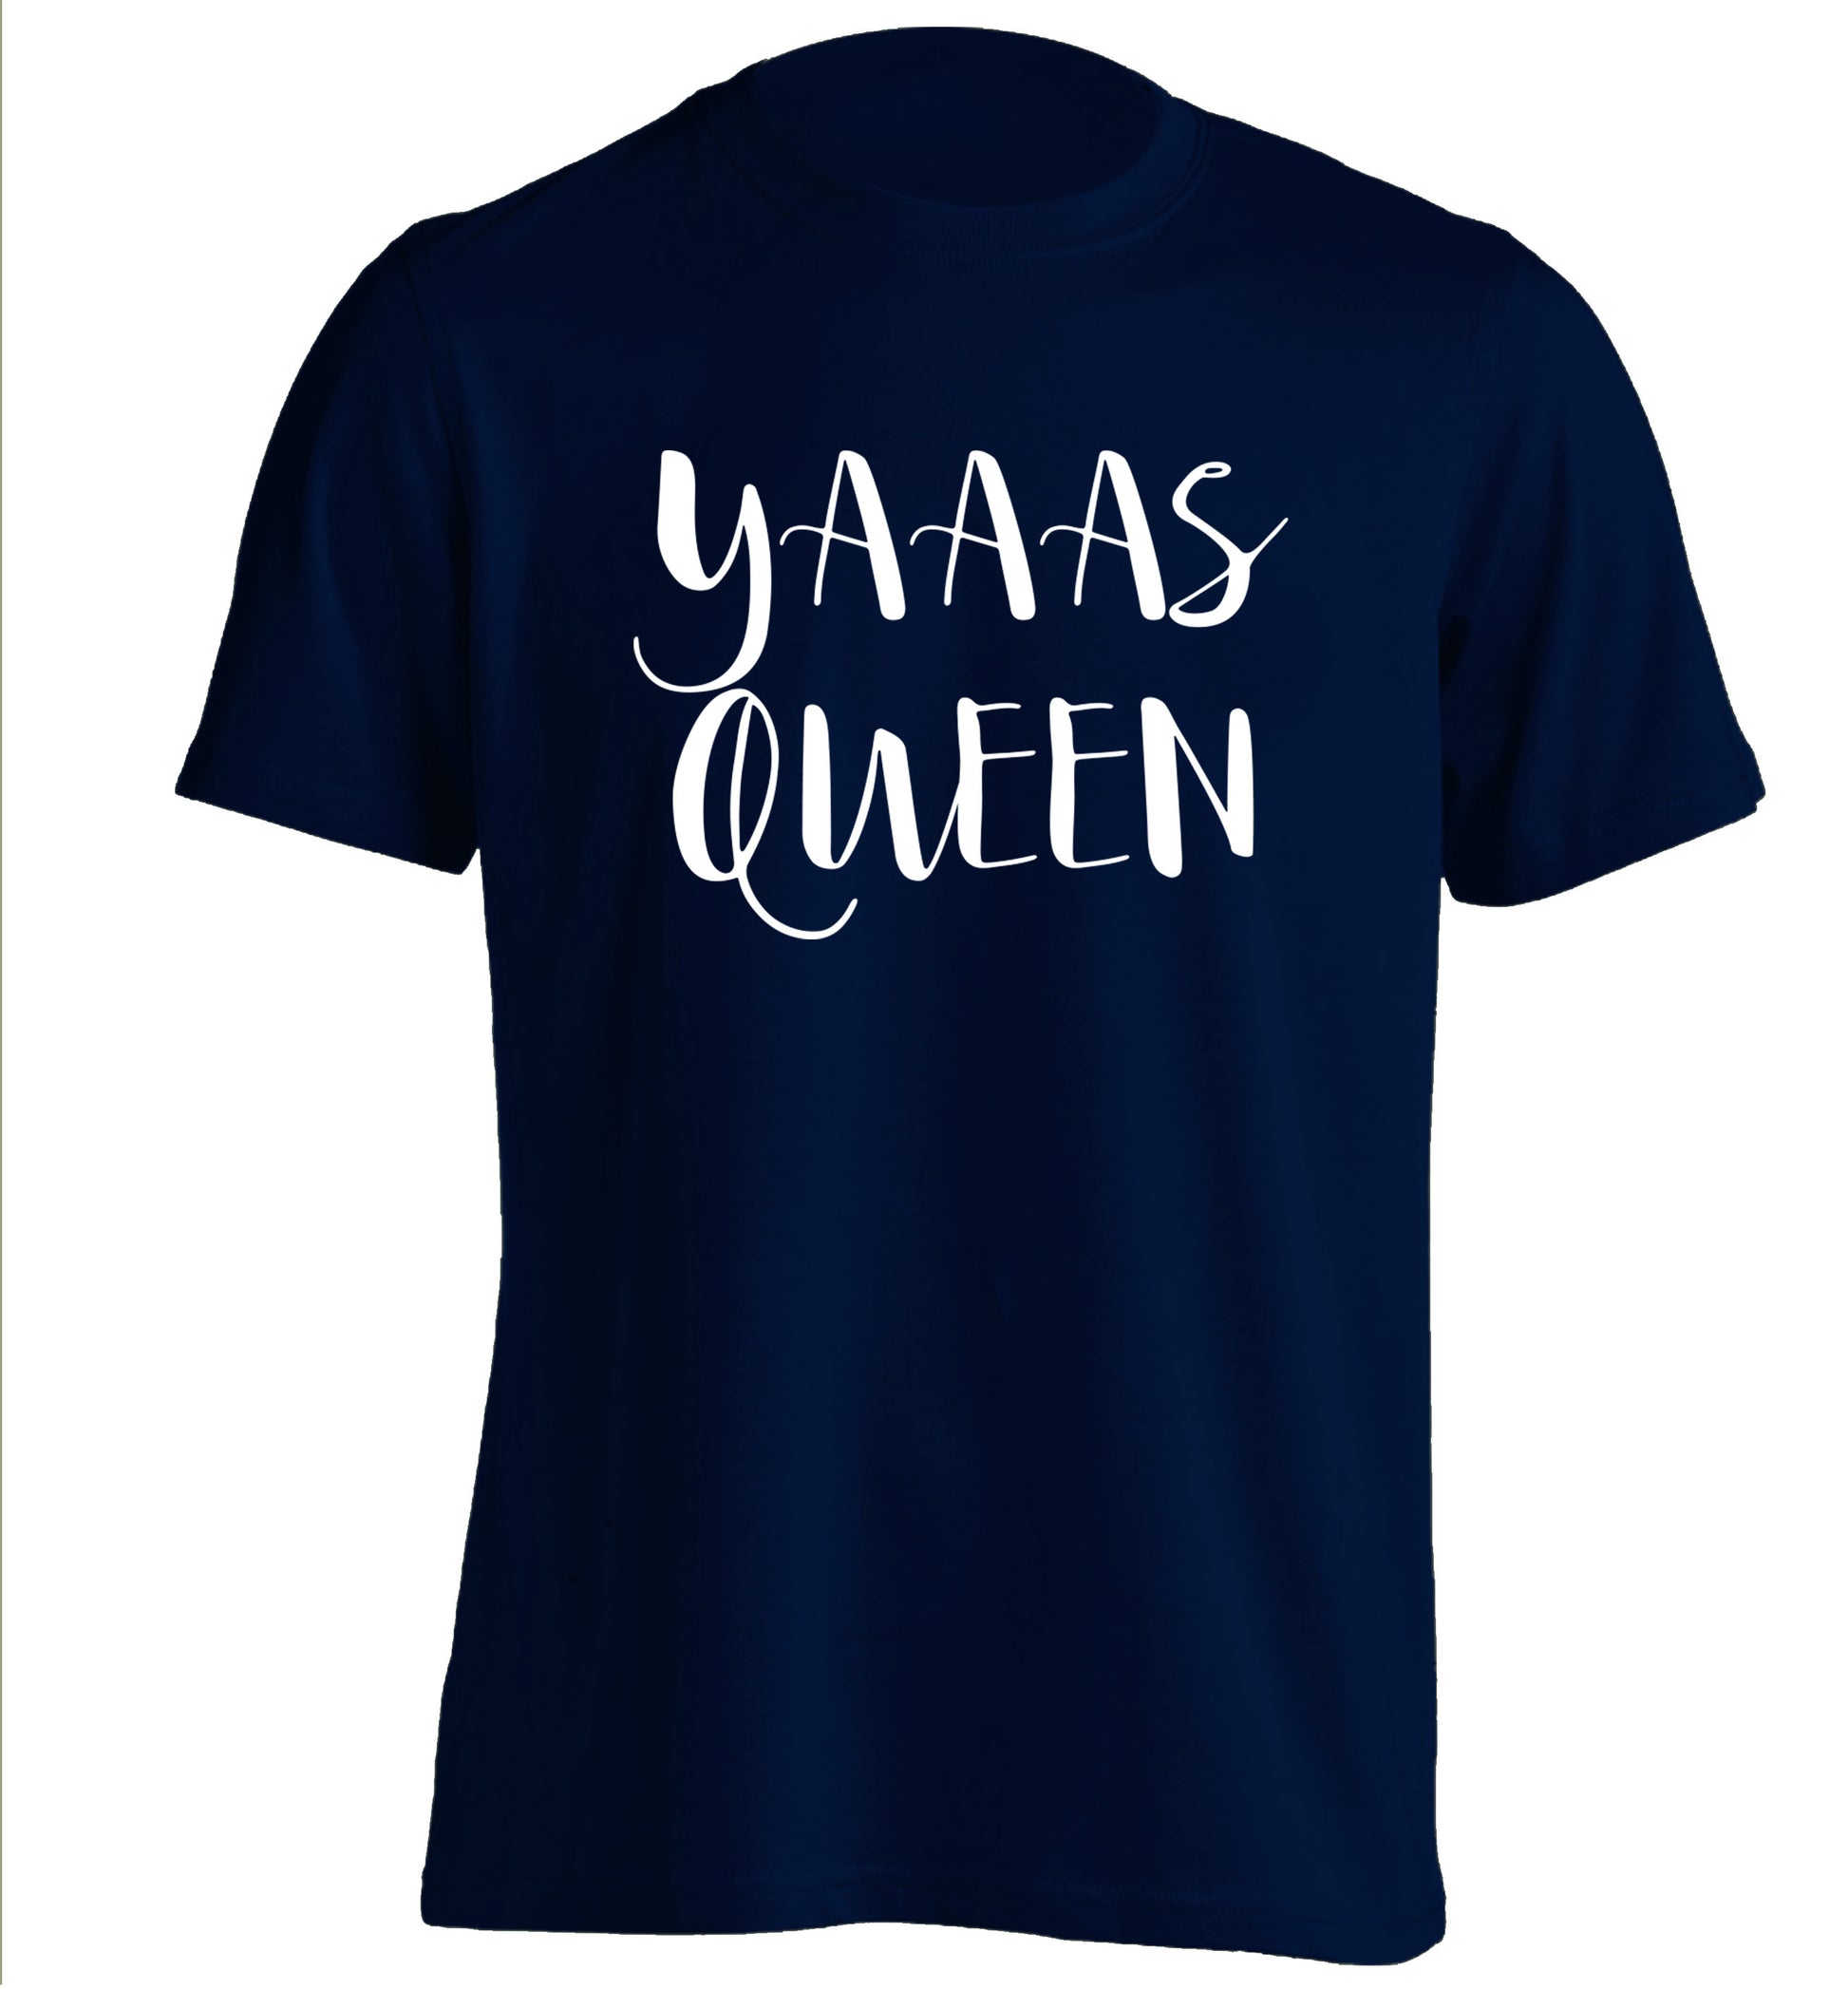 Yas Queen adults unisex navy Tshirt 2XL